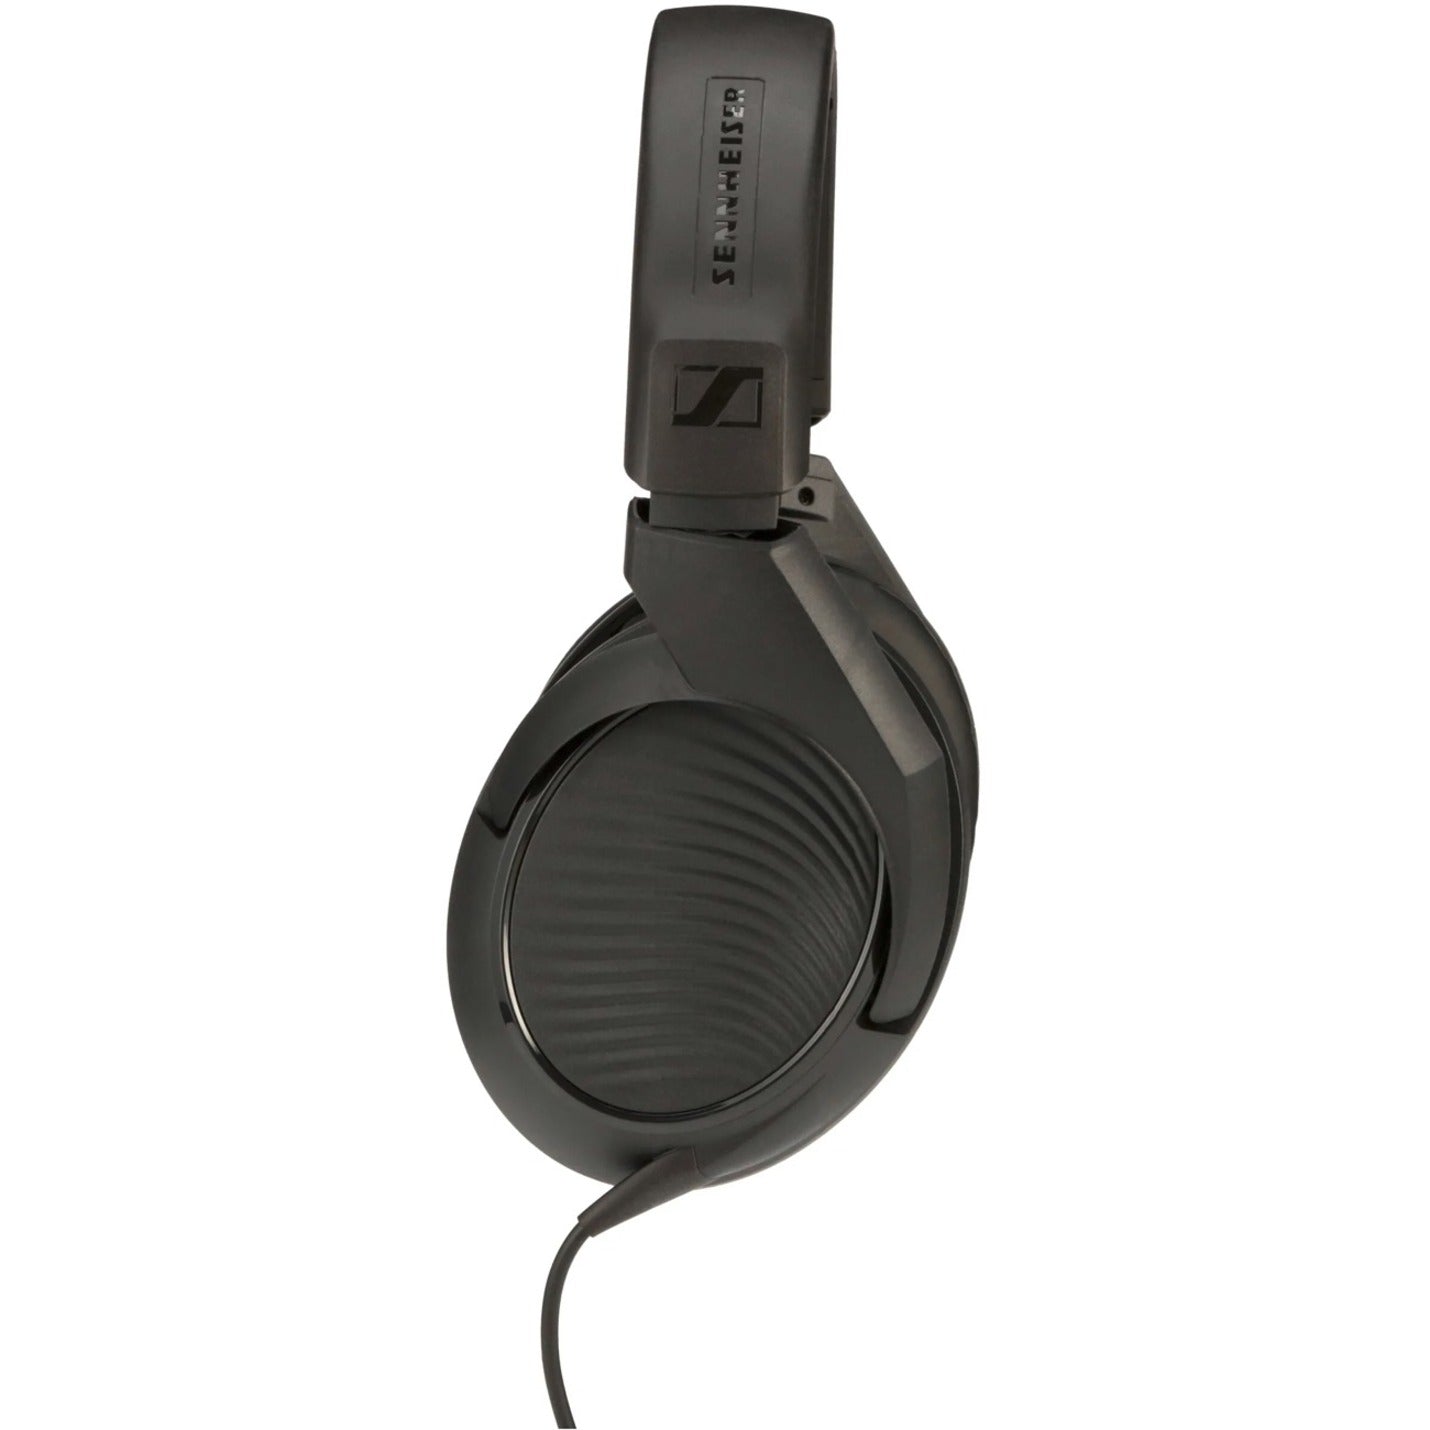 Sennheiser 507182 HD 200 PRO Headphone, Noise Reduction, Comfortable, Over-the-head, Music, Home, Studio